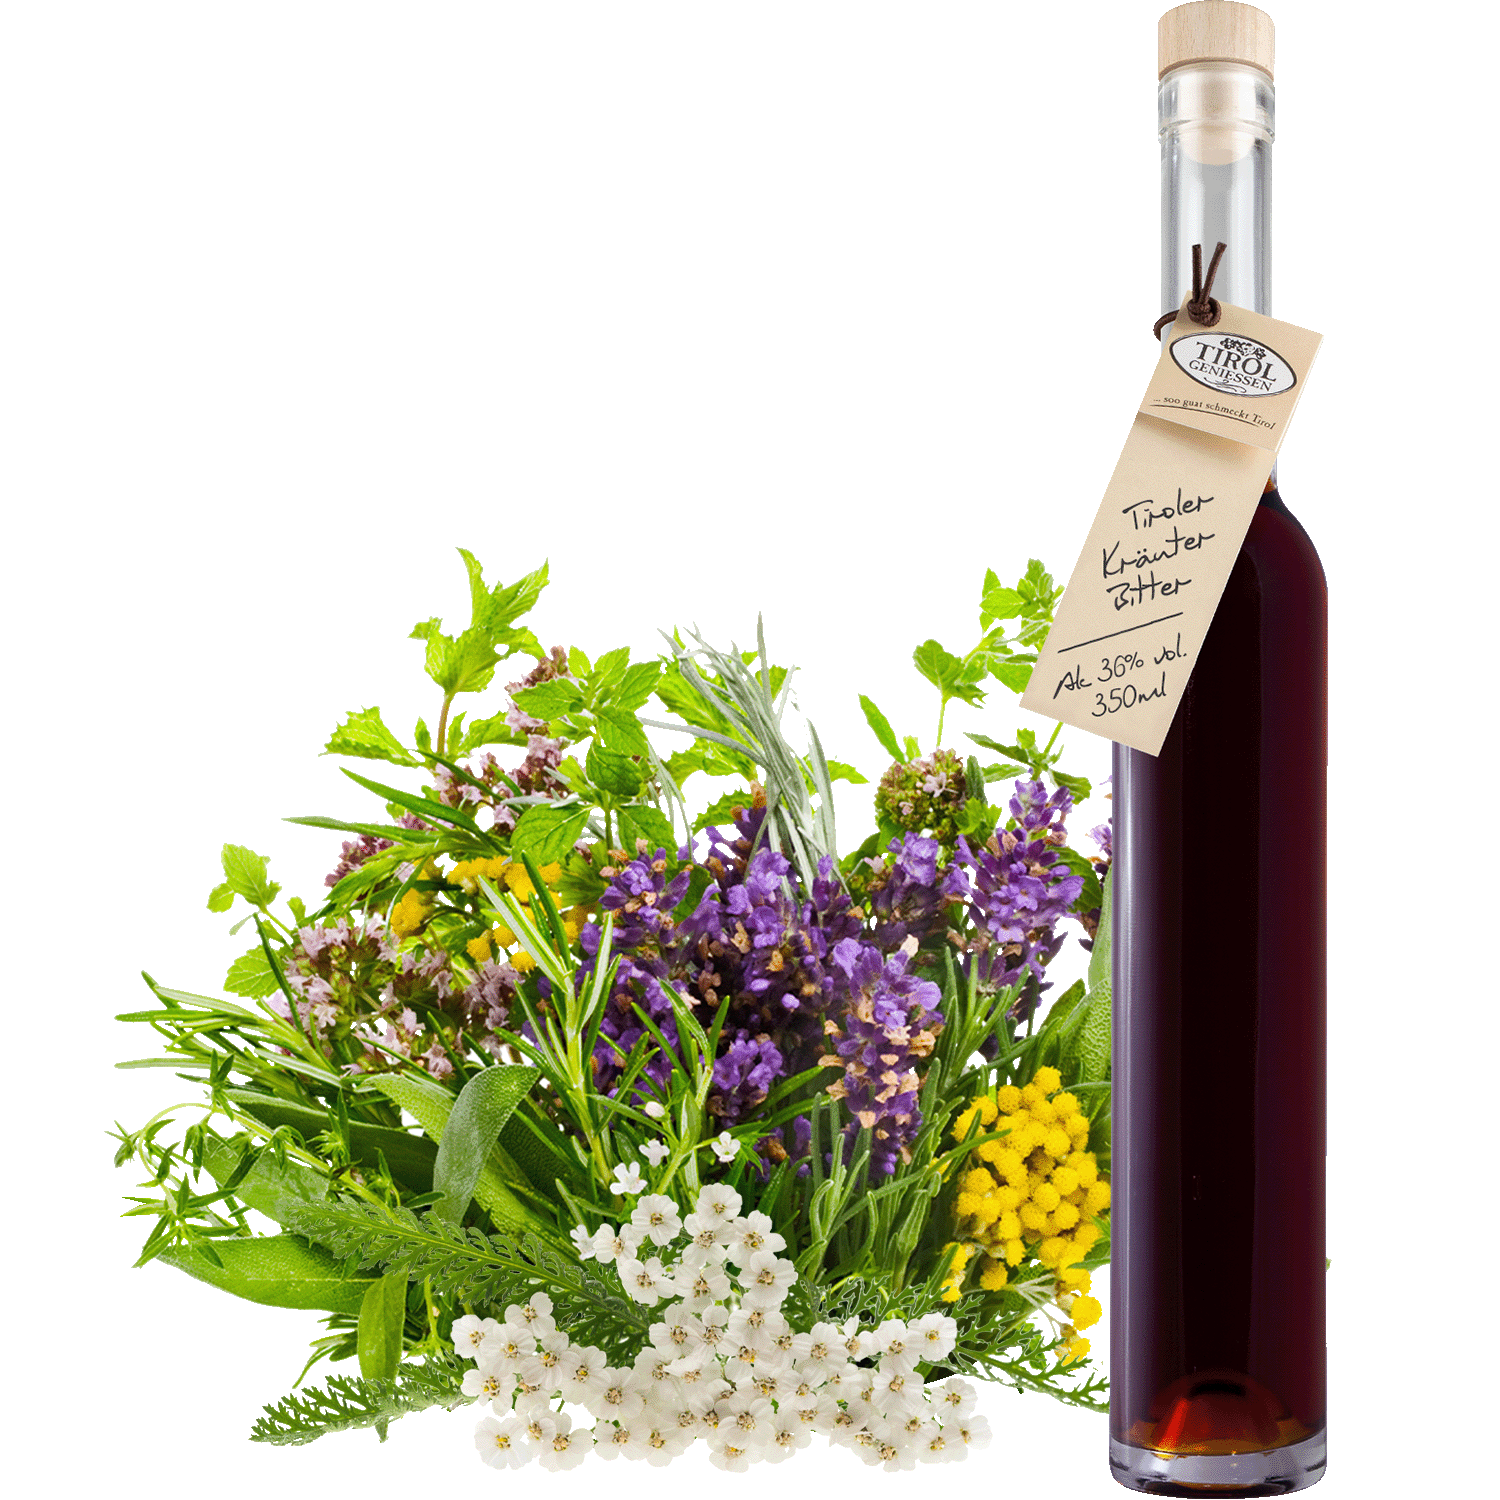 Herbal Bitter in gift bottle from Austria from Tirol Geniessen